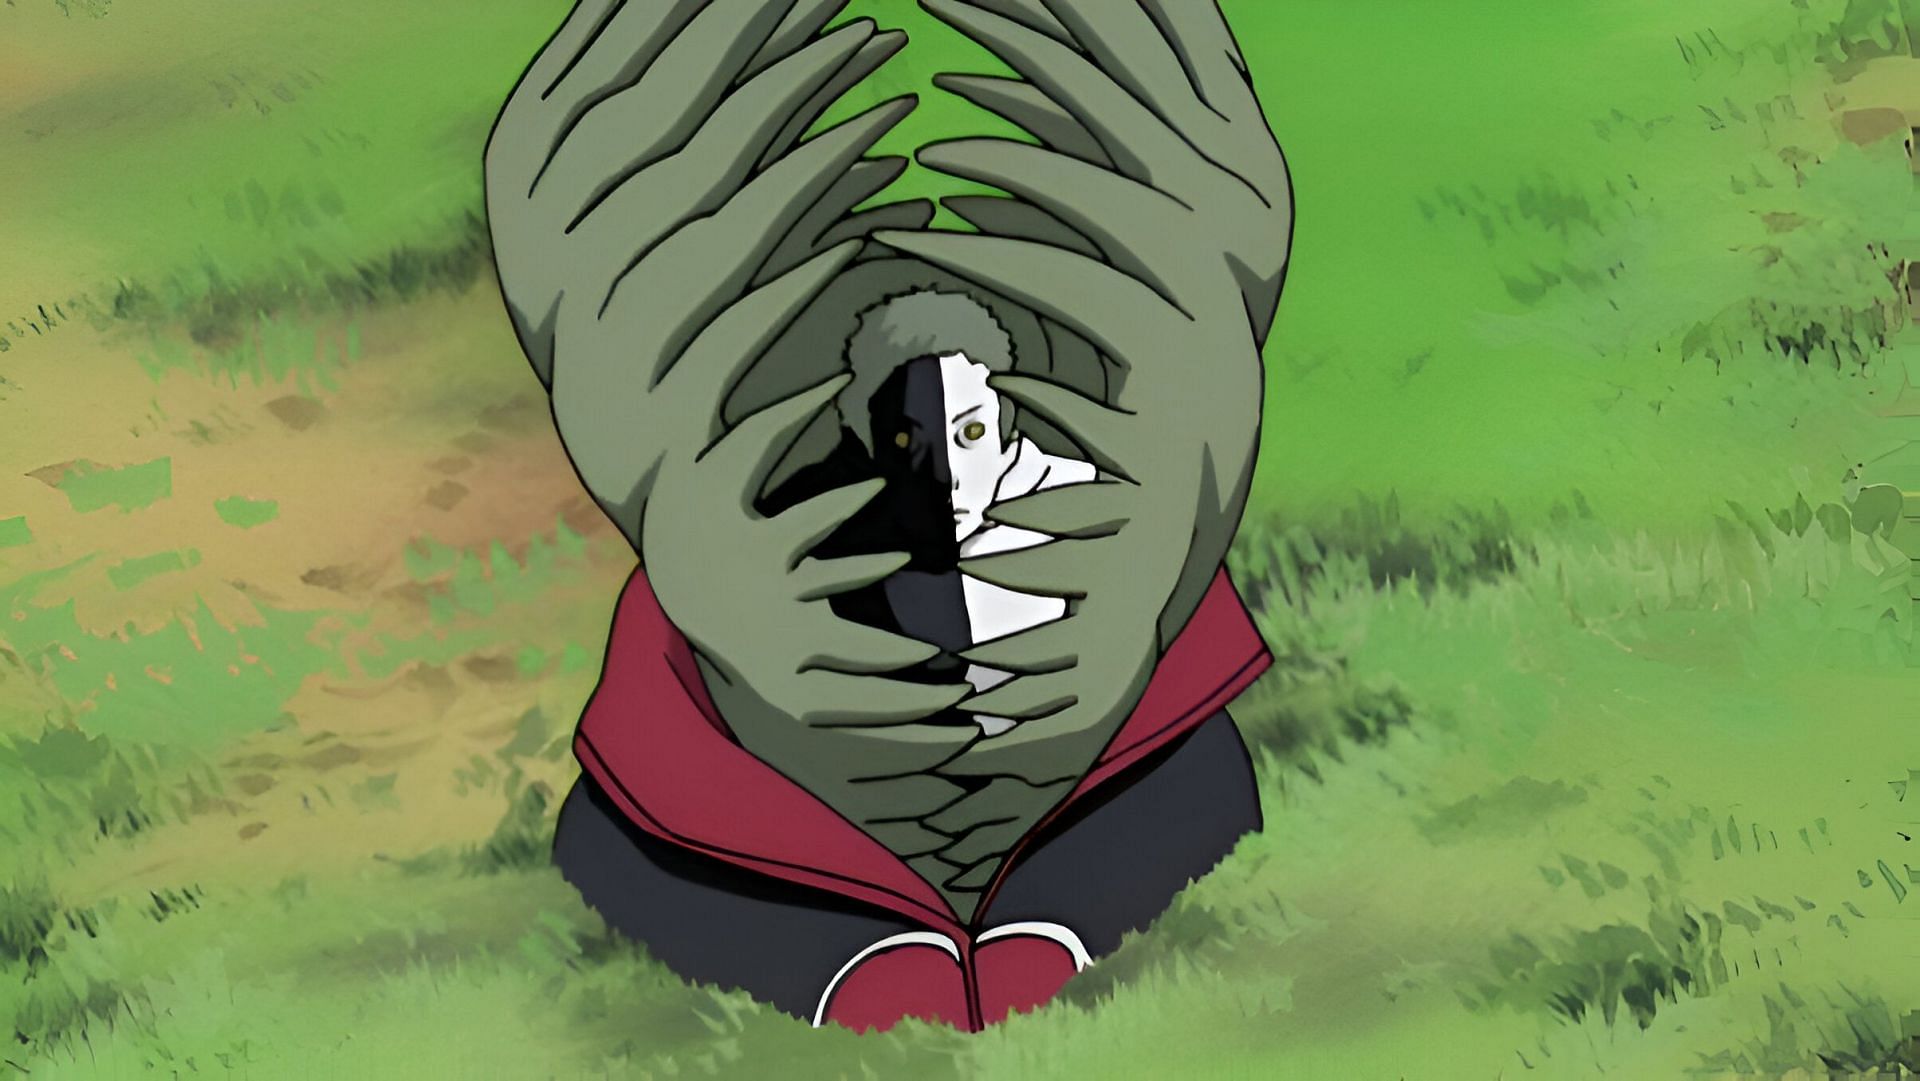 Zetsu as seen in the anime (Image via Studio Pierrot)